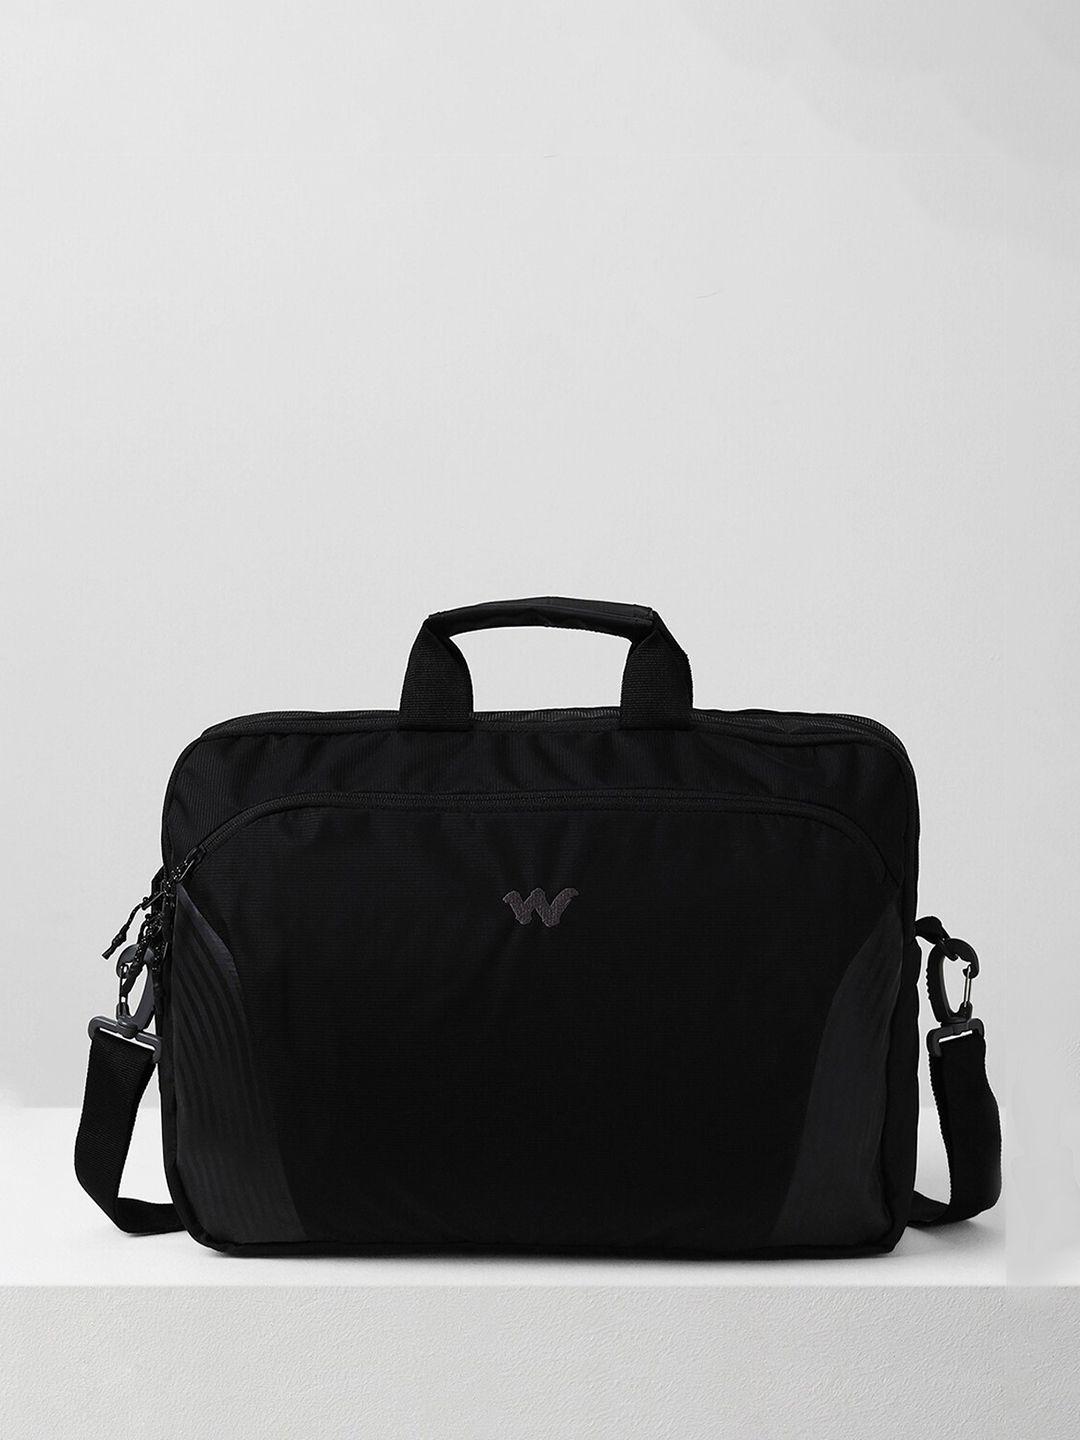 wildcraft unisex black textured messenger bag